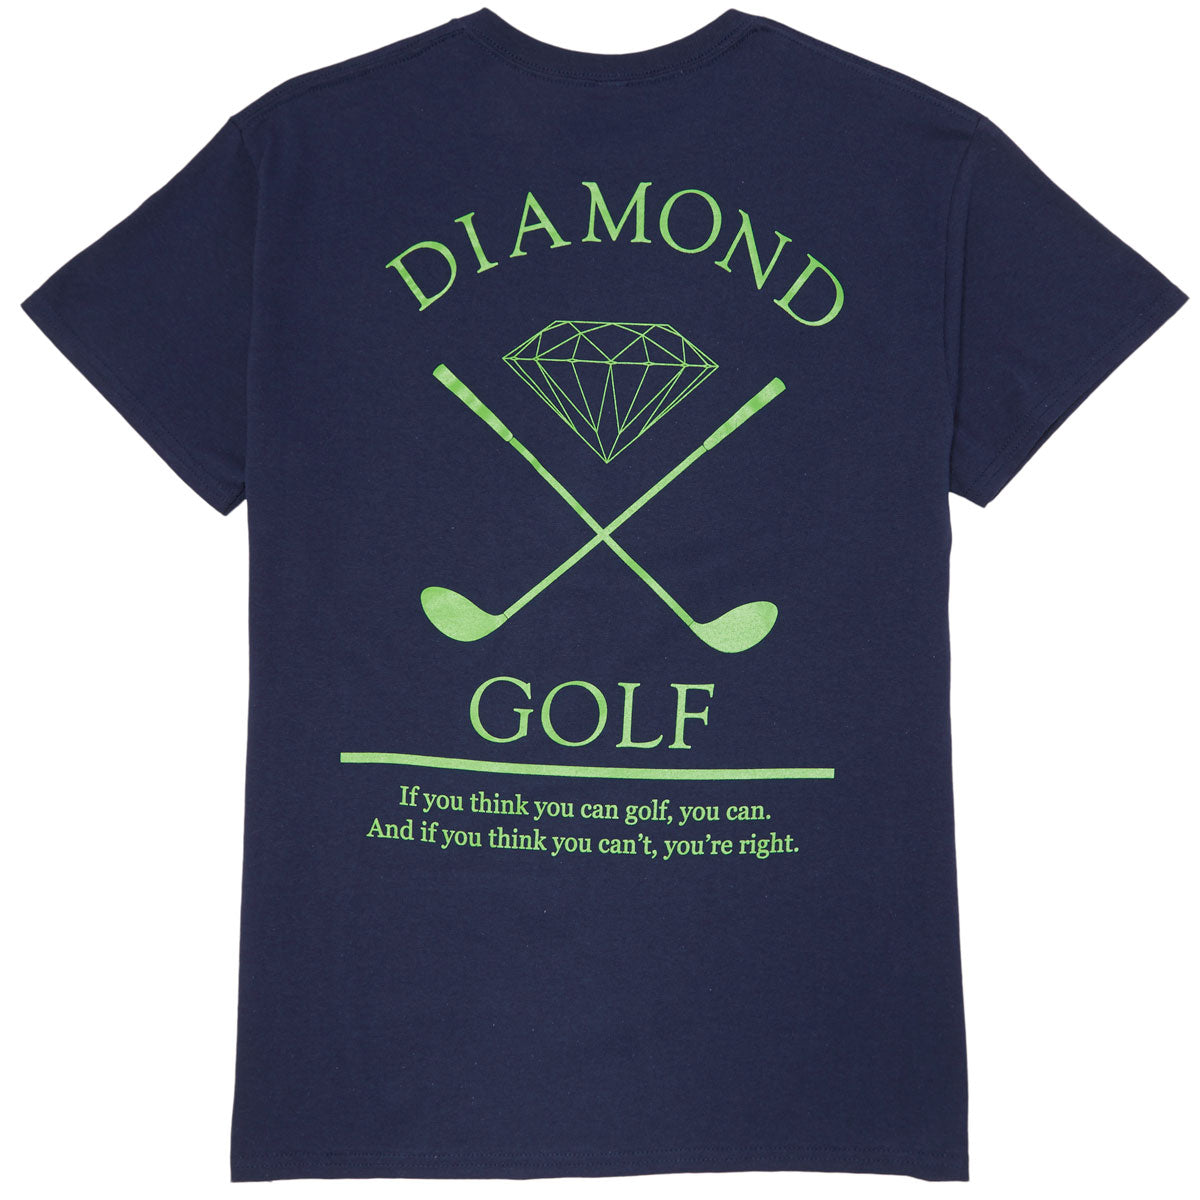 Diamond Supply Co. Golf T-Shirt - Navy image 1